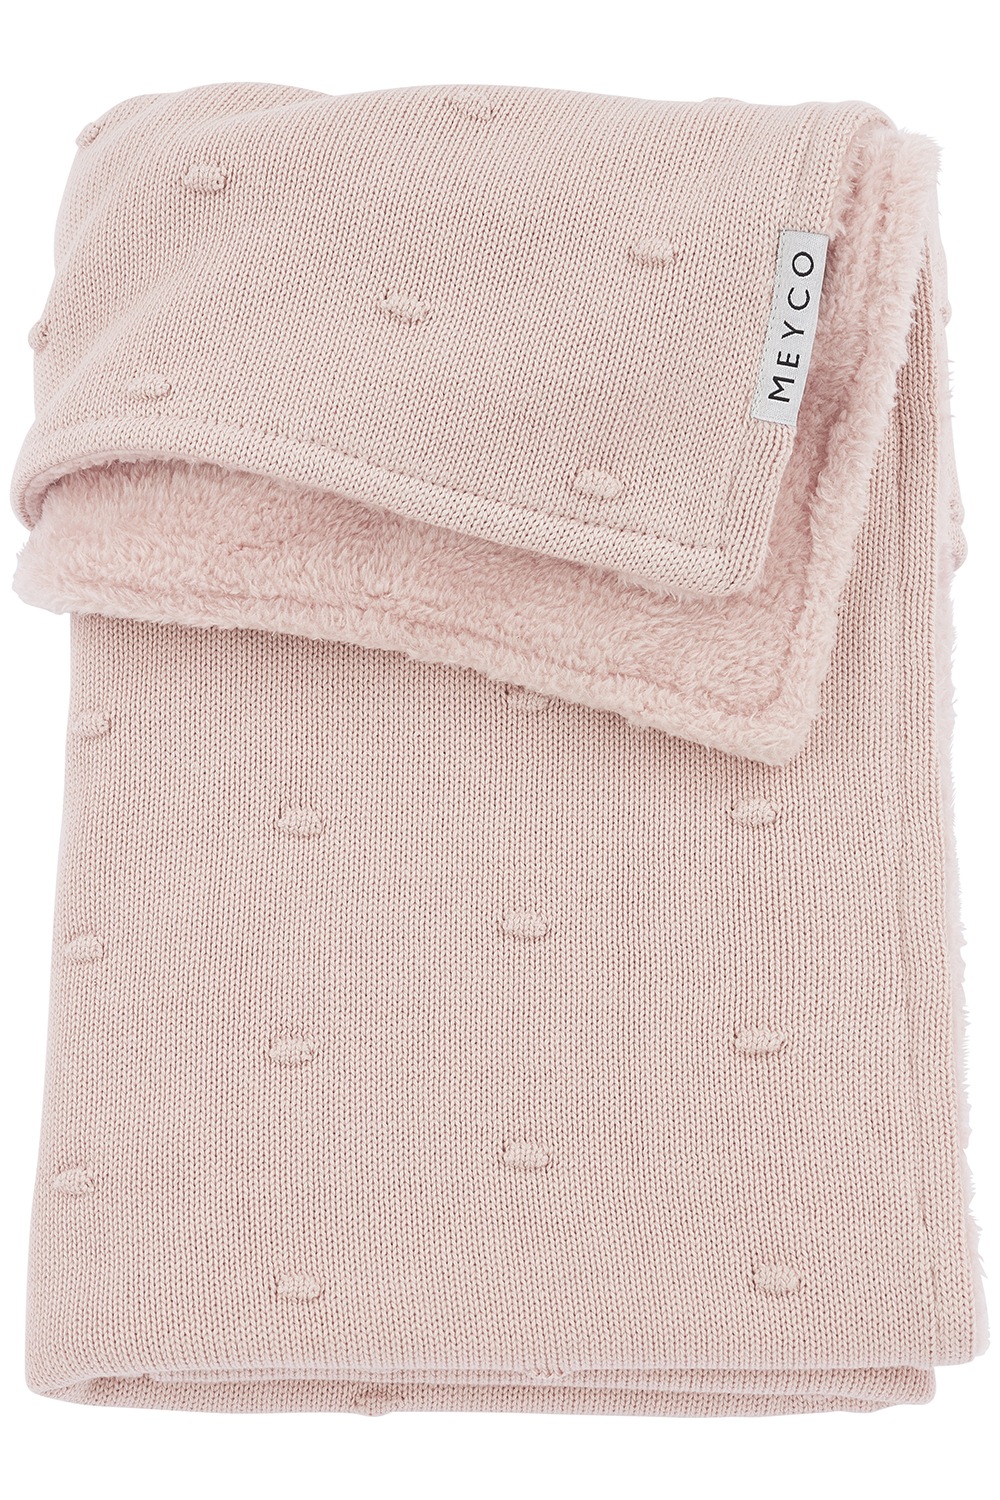 Babydecke groß Mini Knots Teddy - Soft Pink - 100x150cm